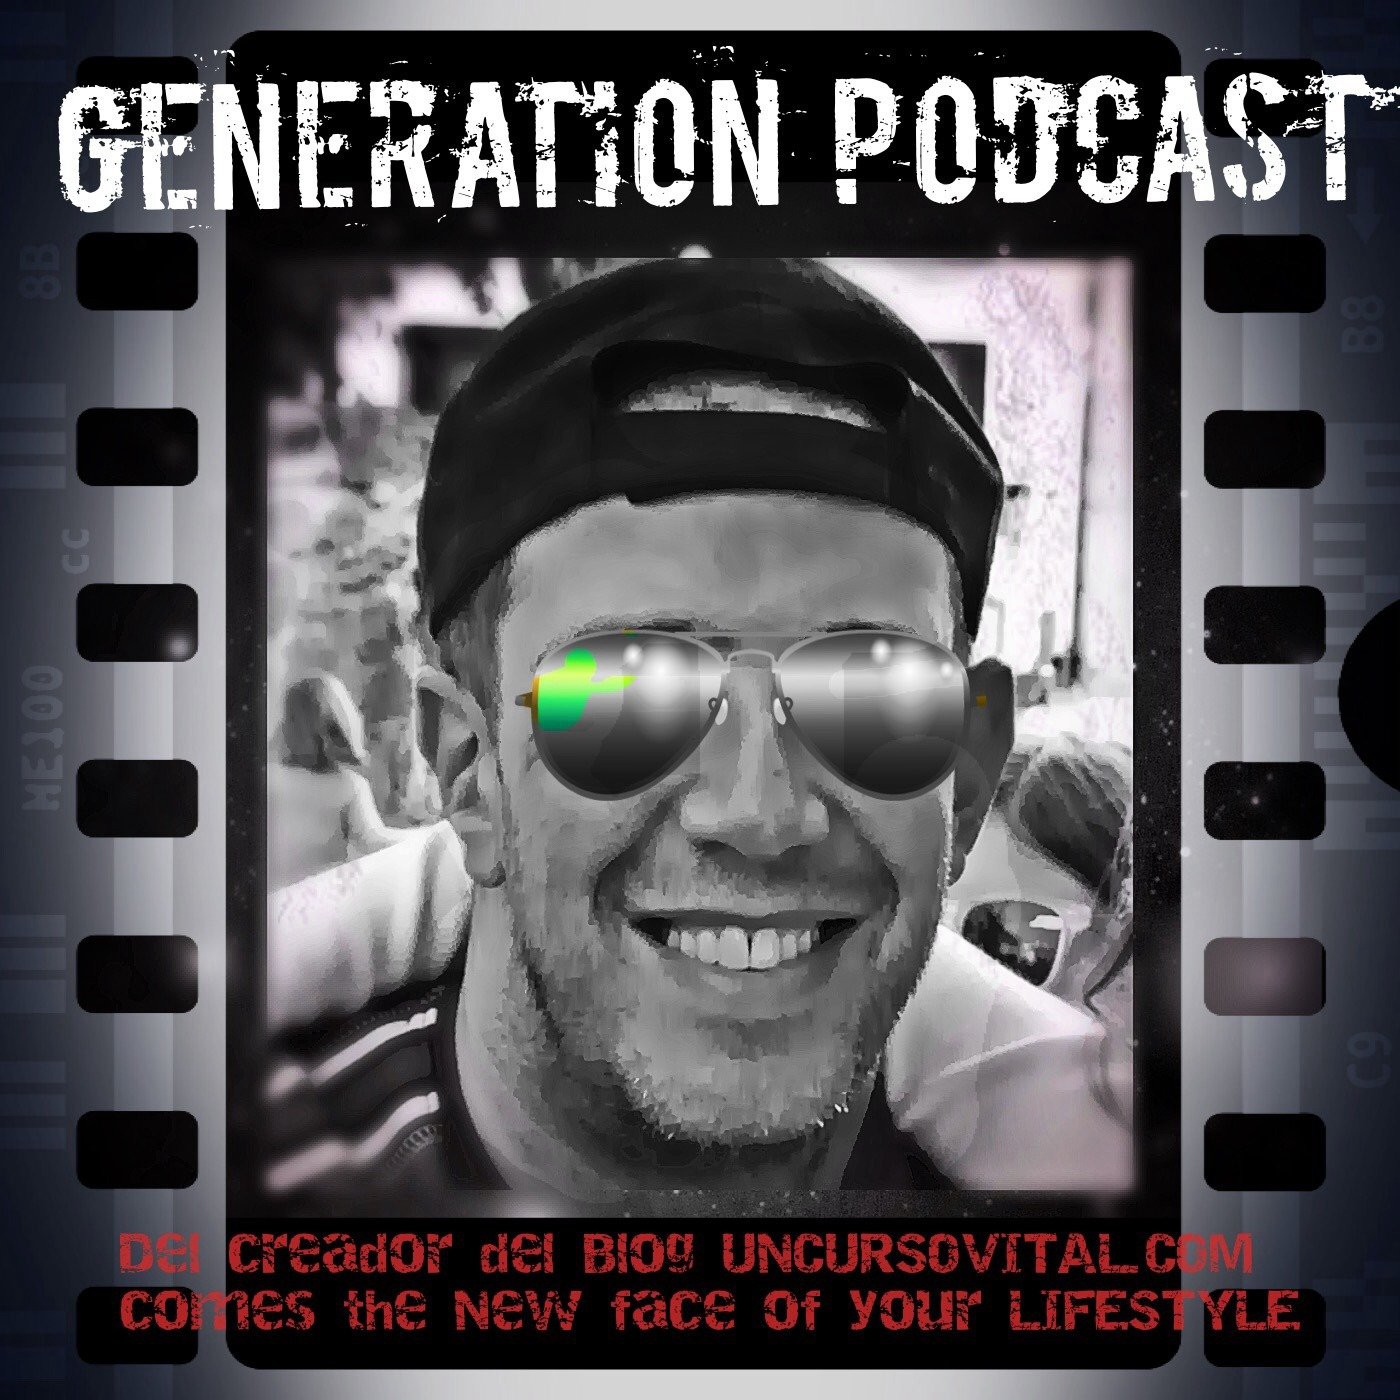 Generation Podcast